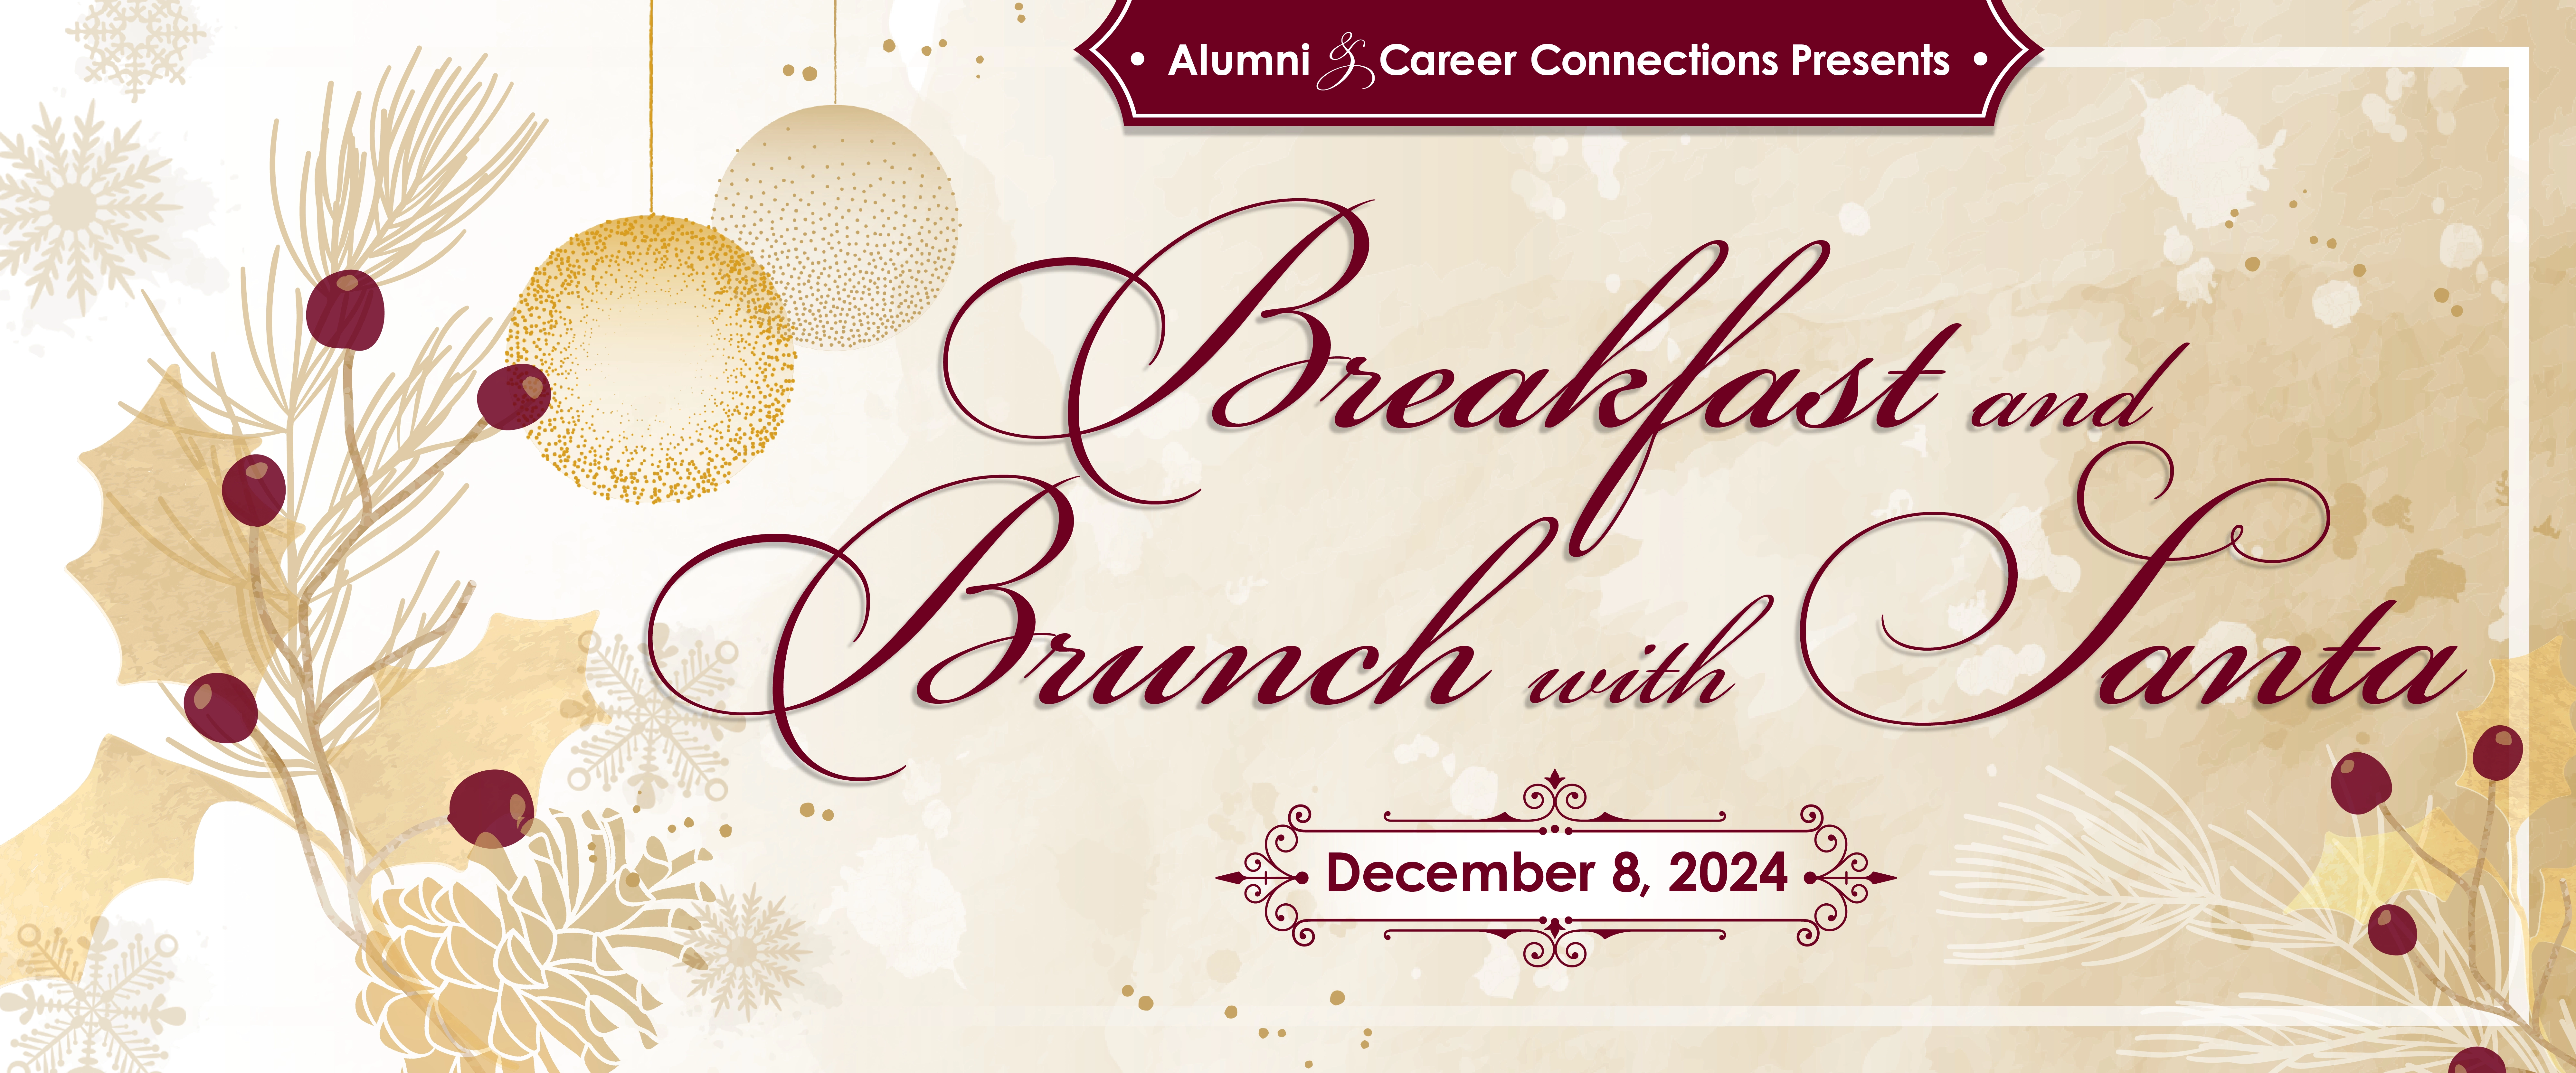 Alumni Breakfast with Santa 2024